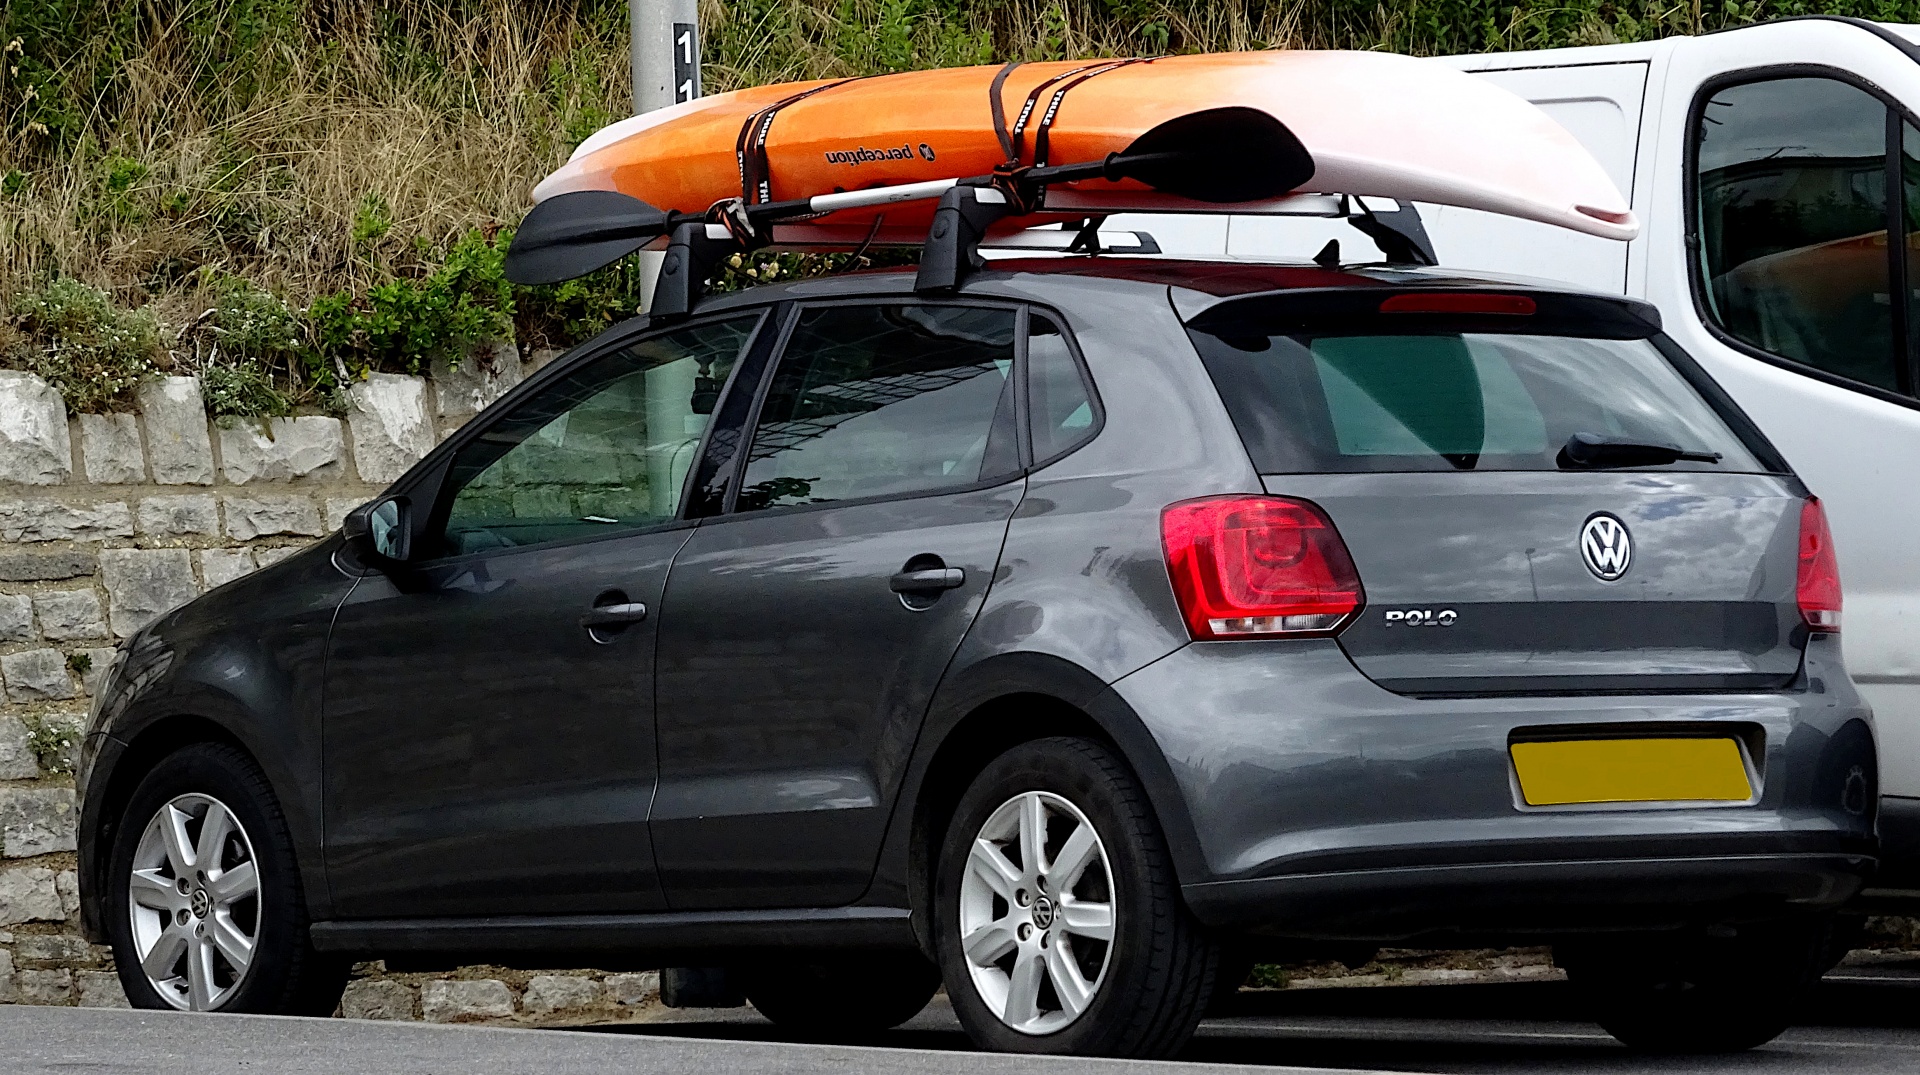 How to transport a kayak